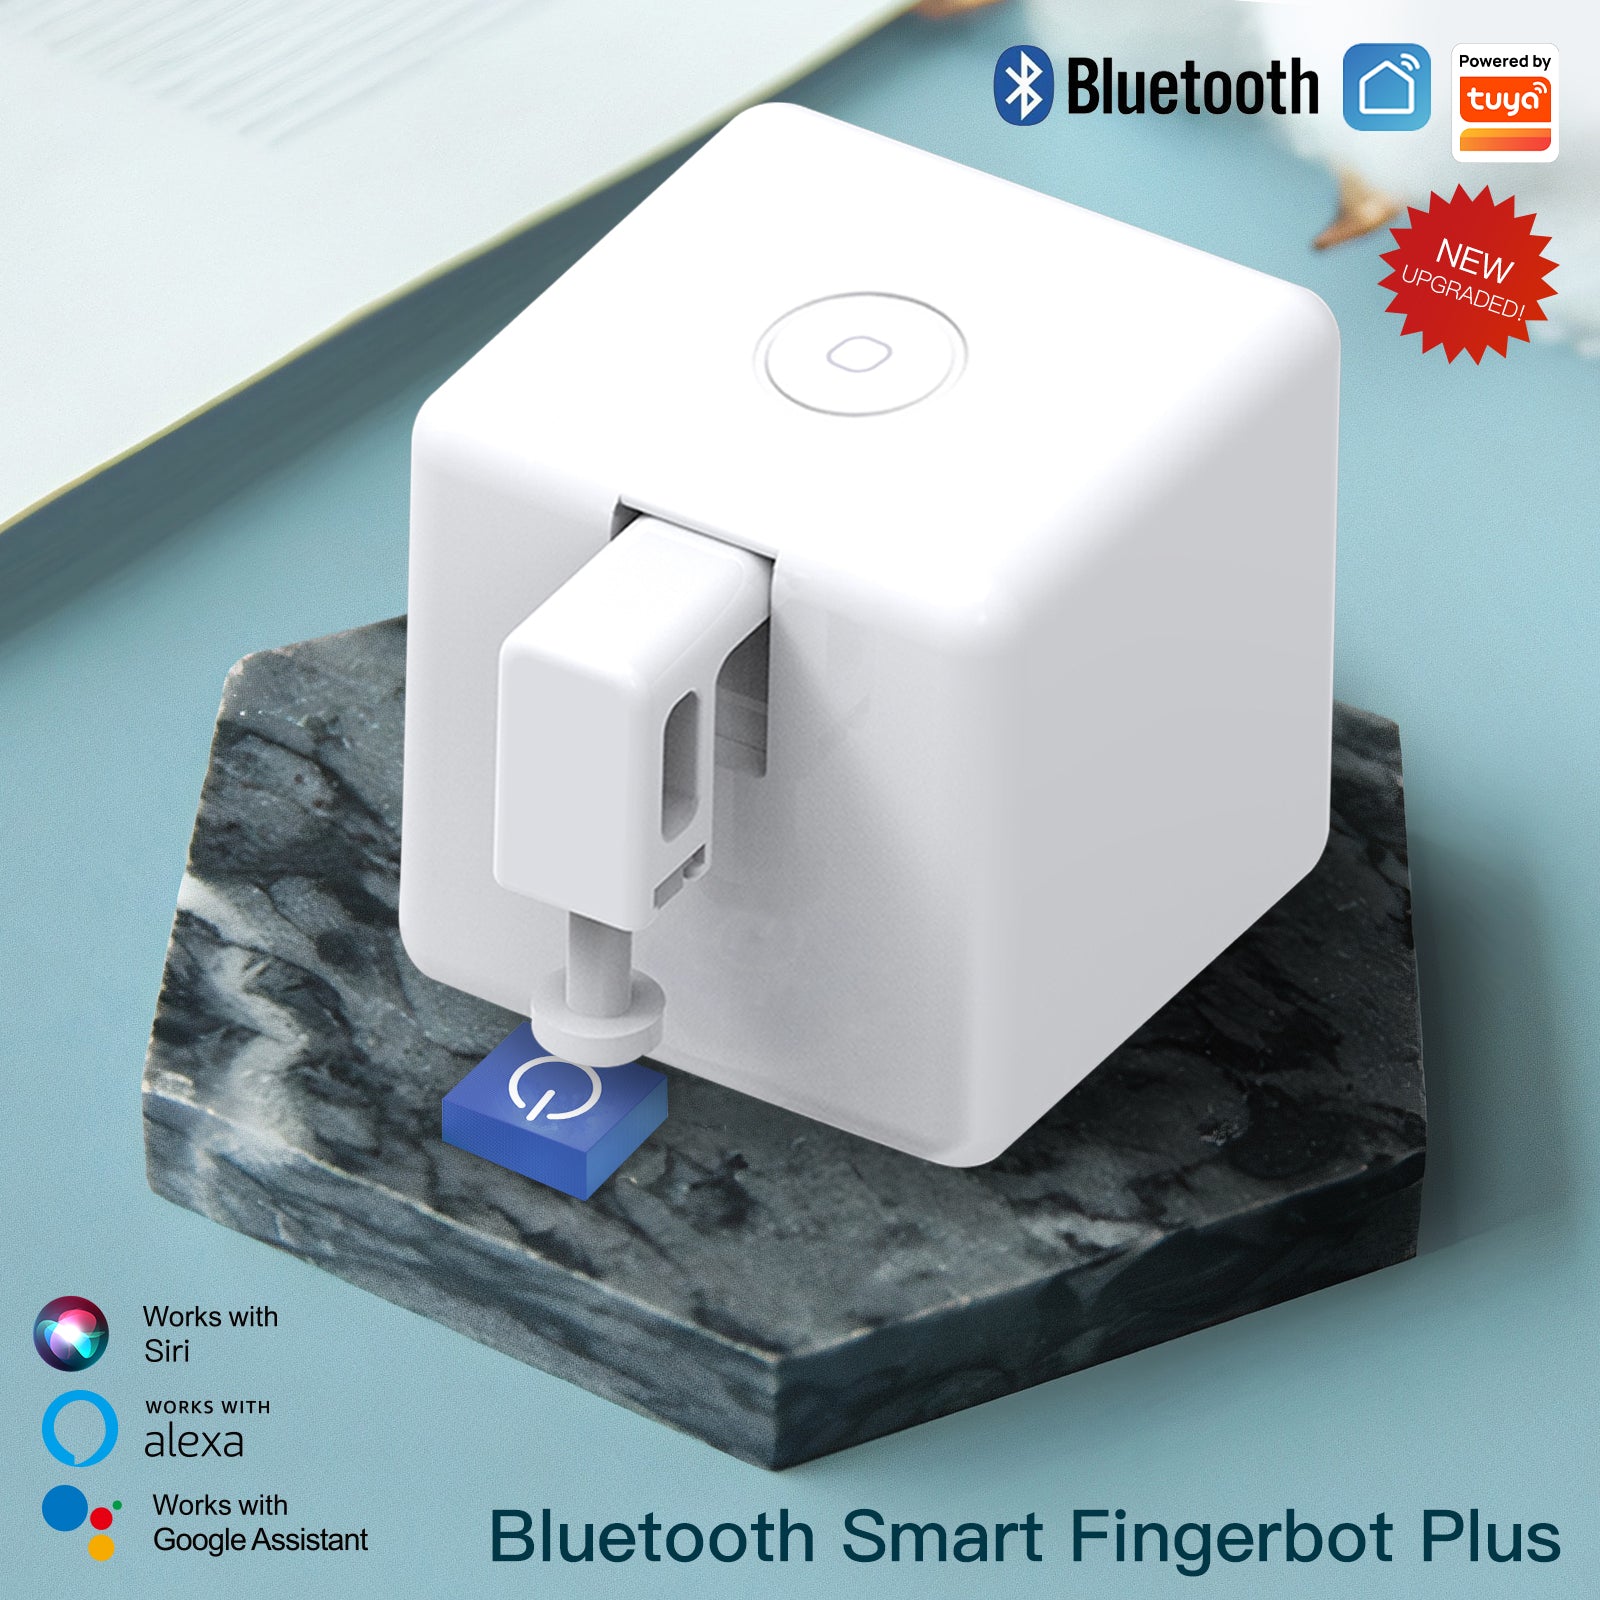 Bluetooth Smart Fingerbot Plus